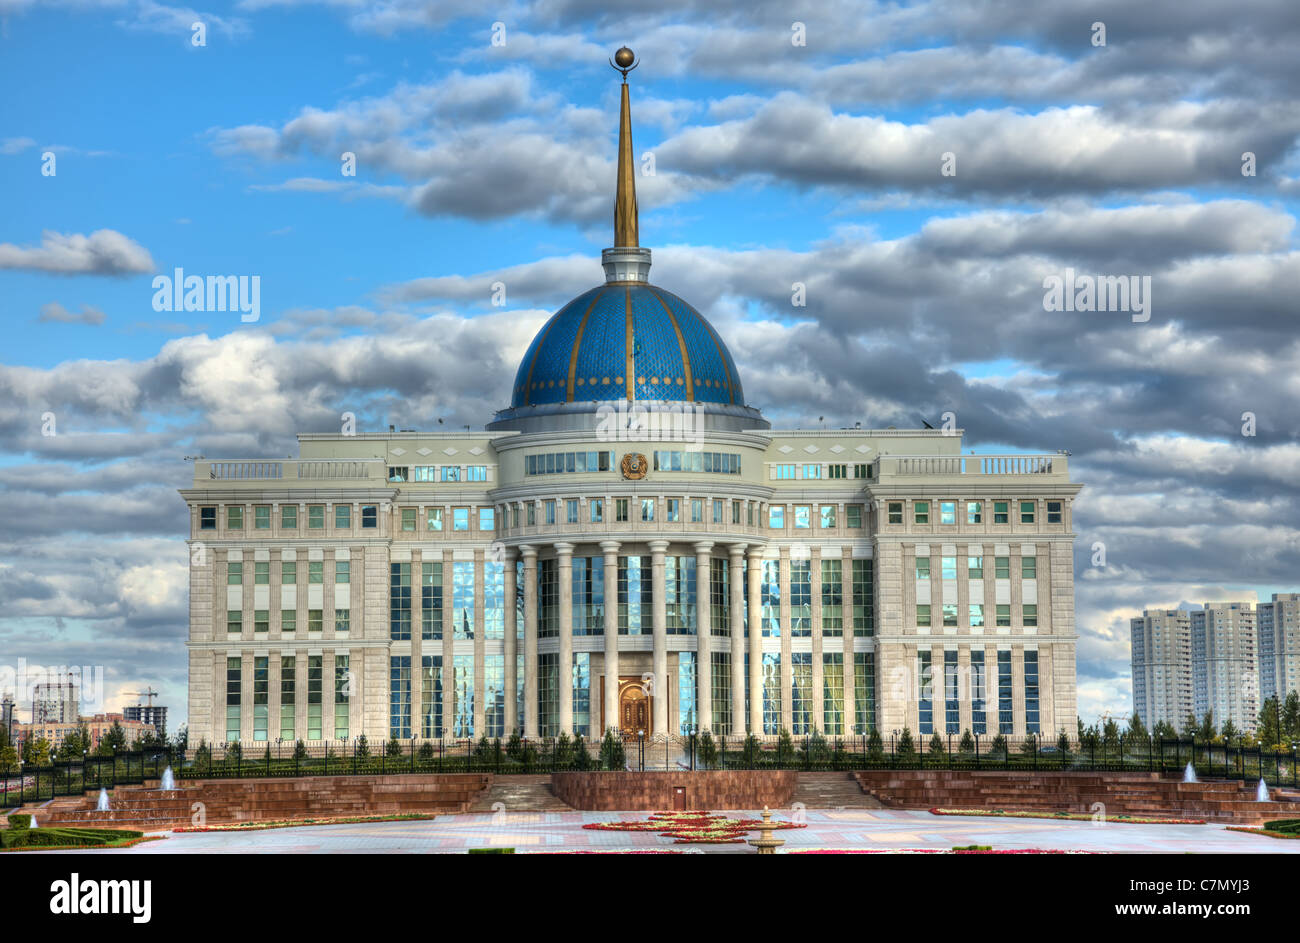 President residence Ak-Orda, Astana, Kazakhstan. HDR image. Stock Photo